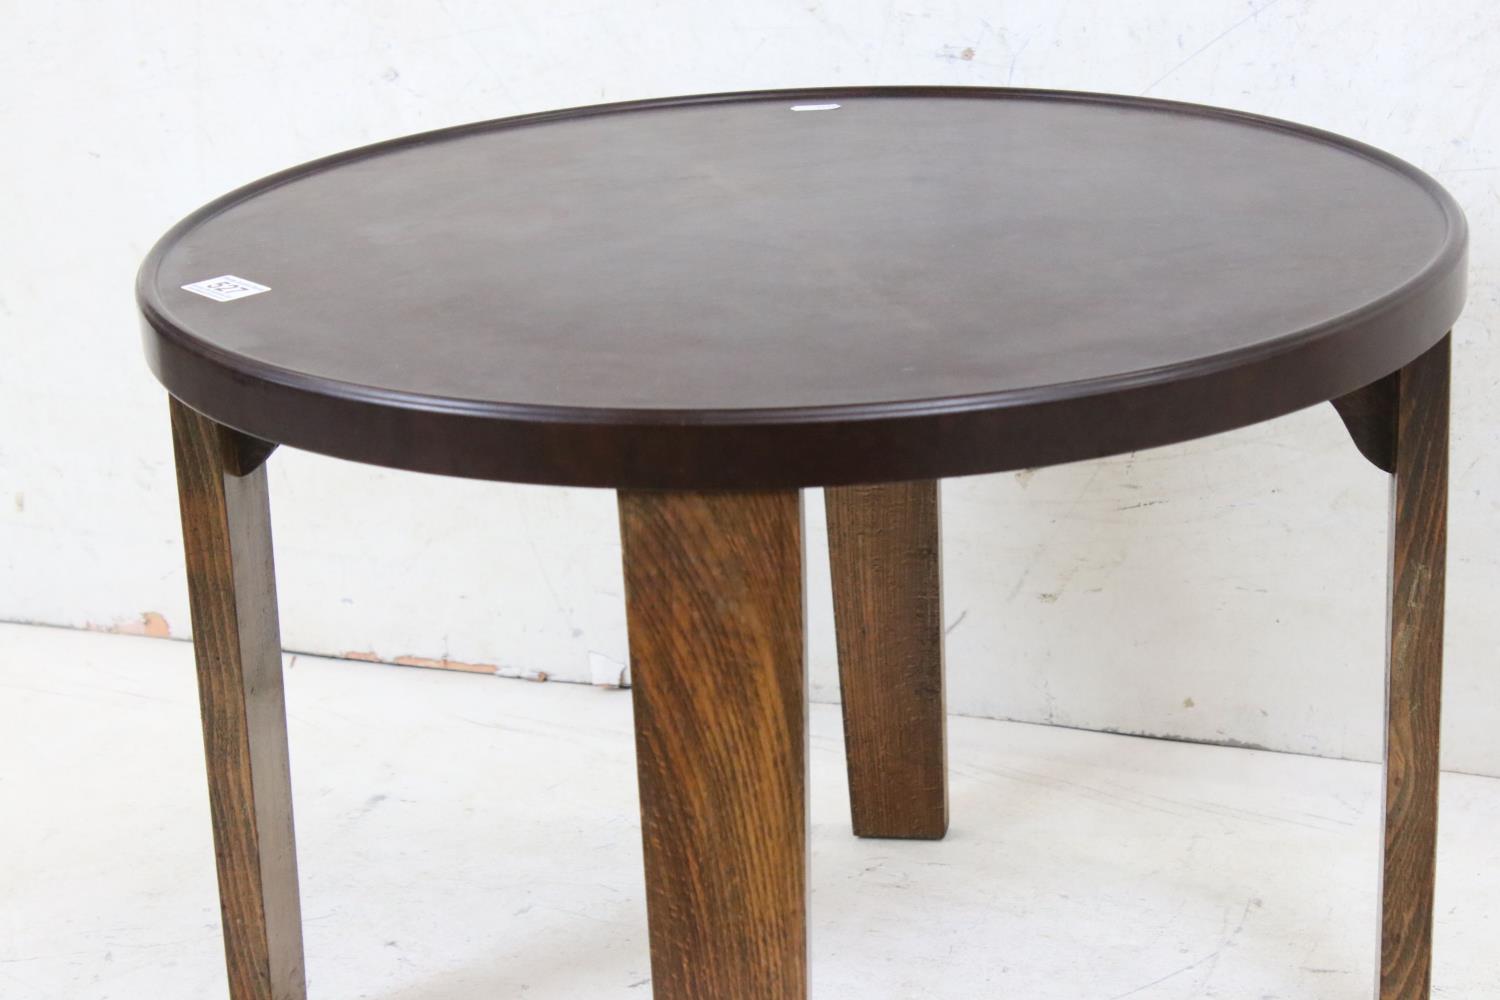 Mid 20th century Circular Coffee Table with Bakelite Top, 60cm diameter - Image 3 of 4